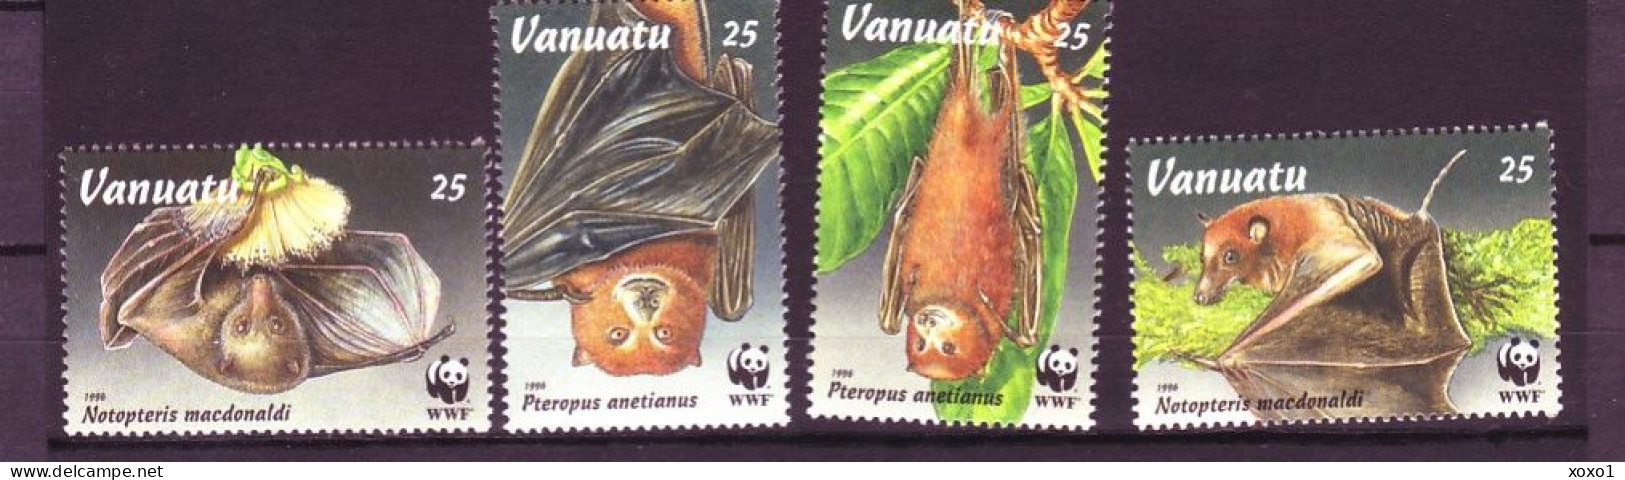 Vanuatu 1996 MiNr. 1004 - 1009 WWF Mammals Bats Insular Flying Fox, Fijian Blossom Bat  4v  MNH** 3.60 € - Vanuatu (1980-...)